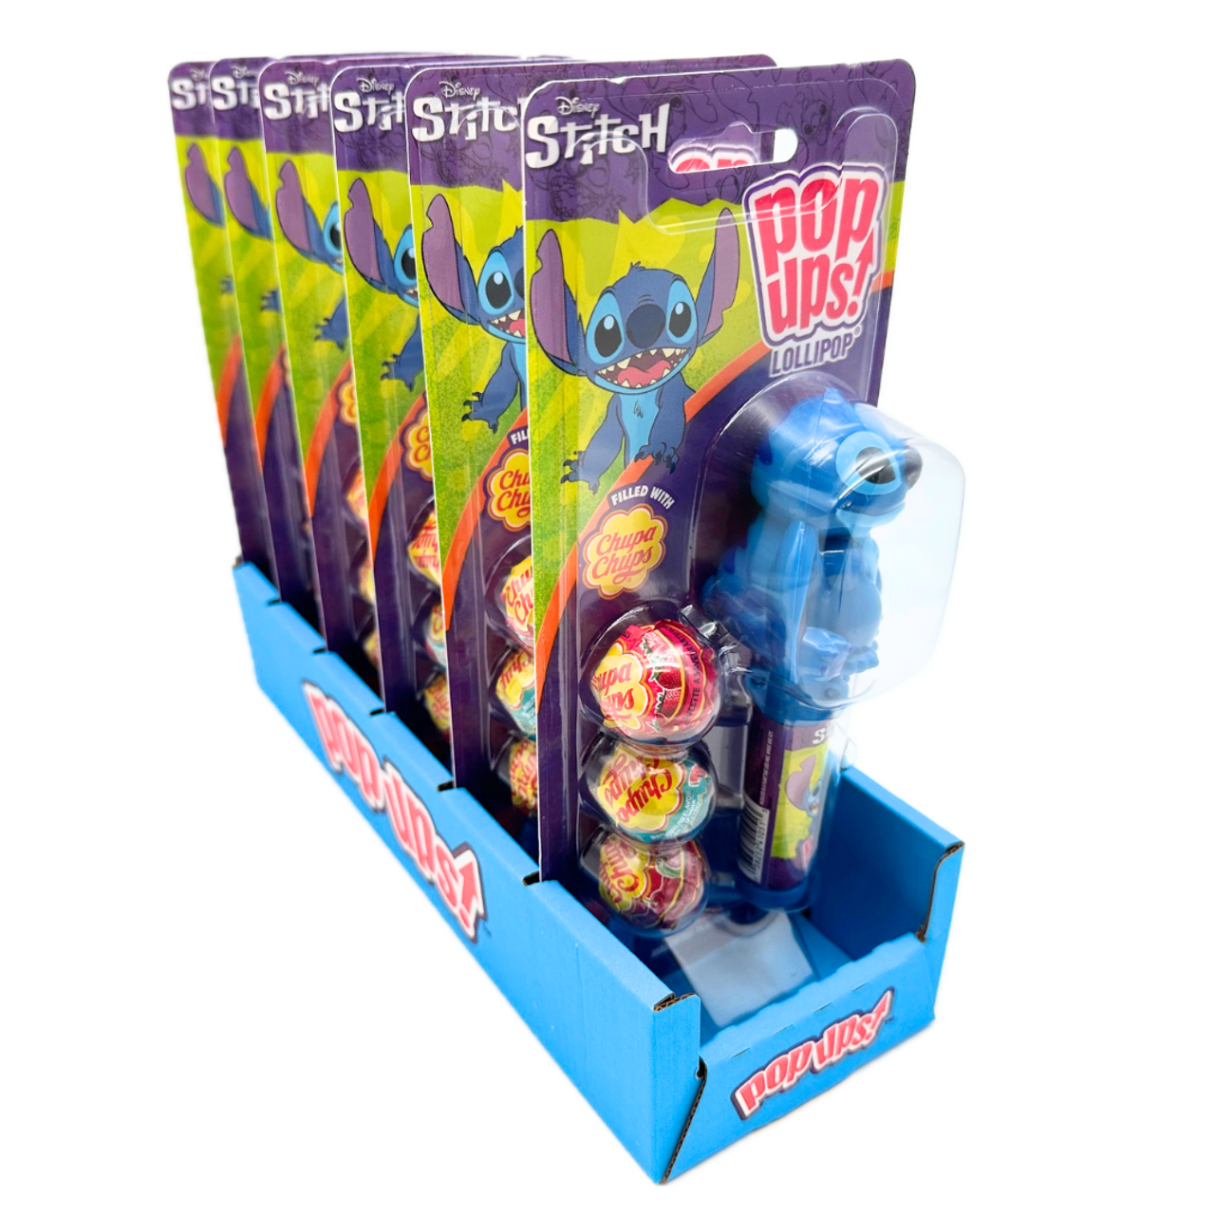 Flix Lilo & Stitch Pop Ups Lollipop 1.26oz - 6ct